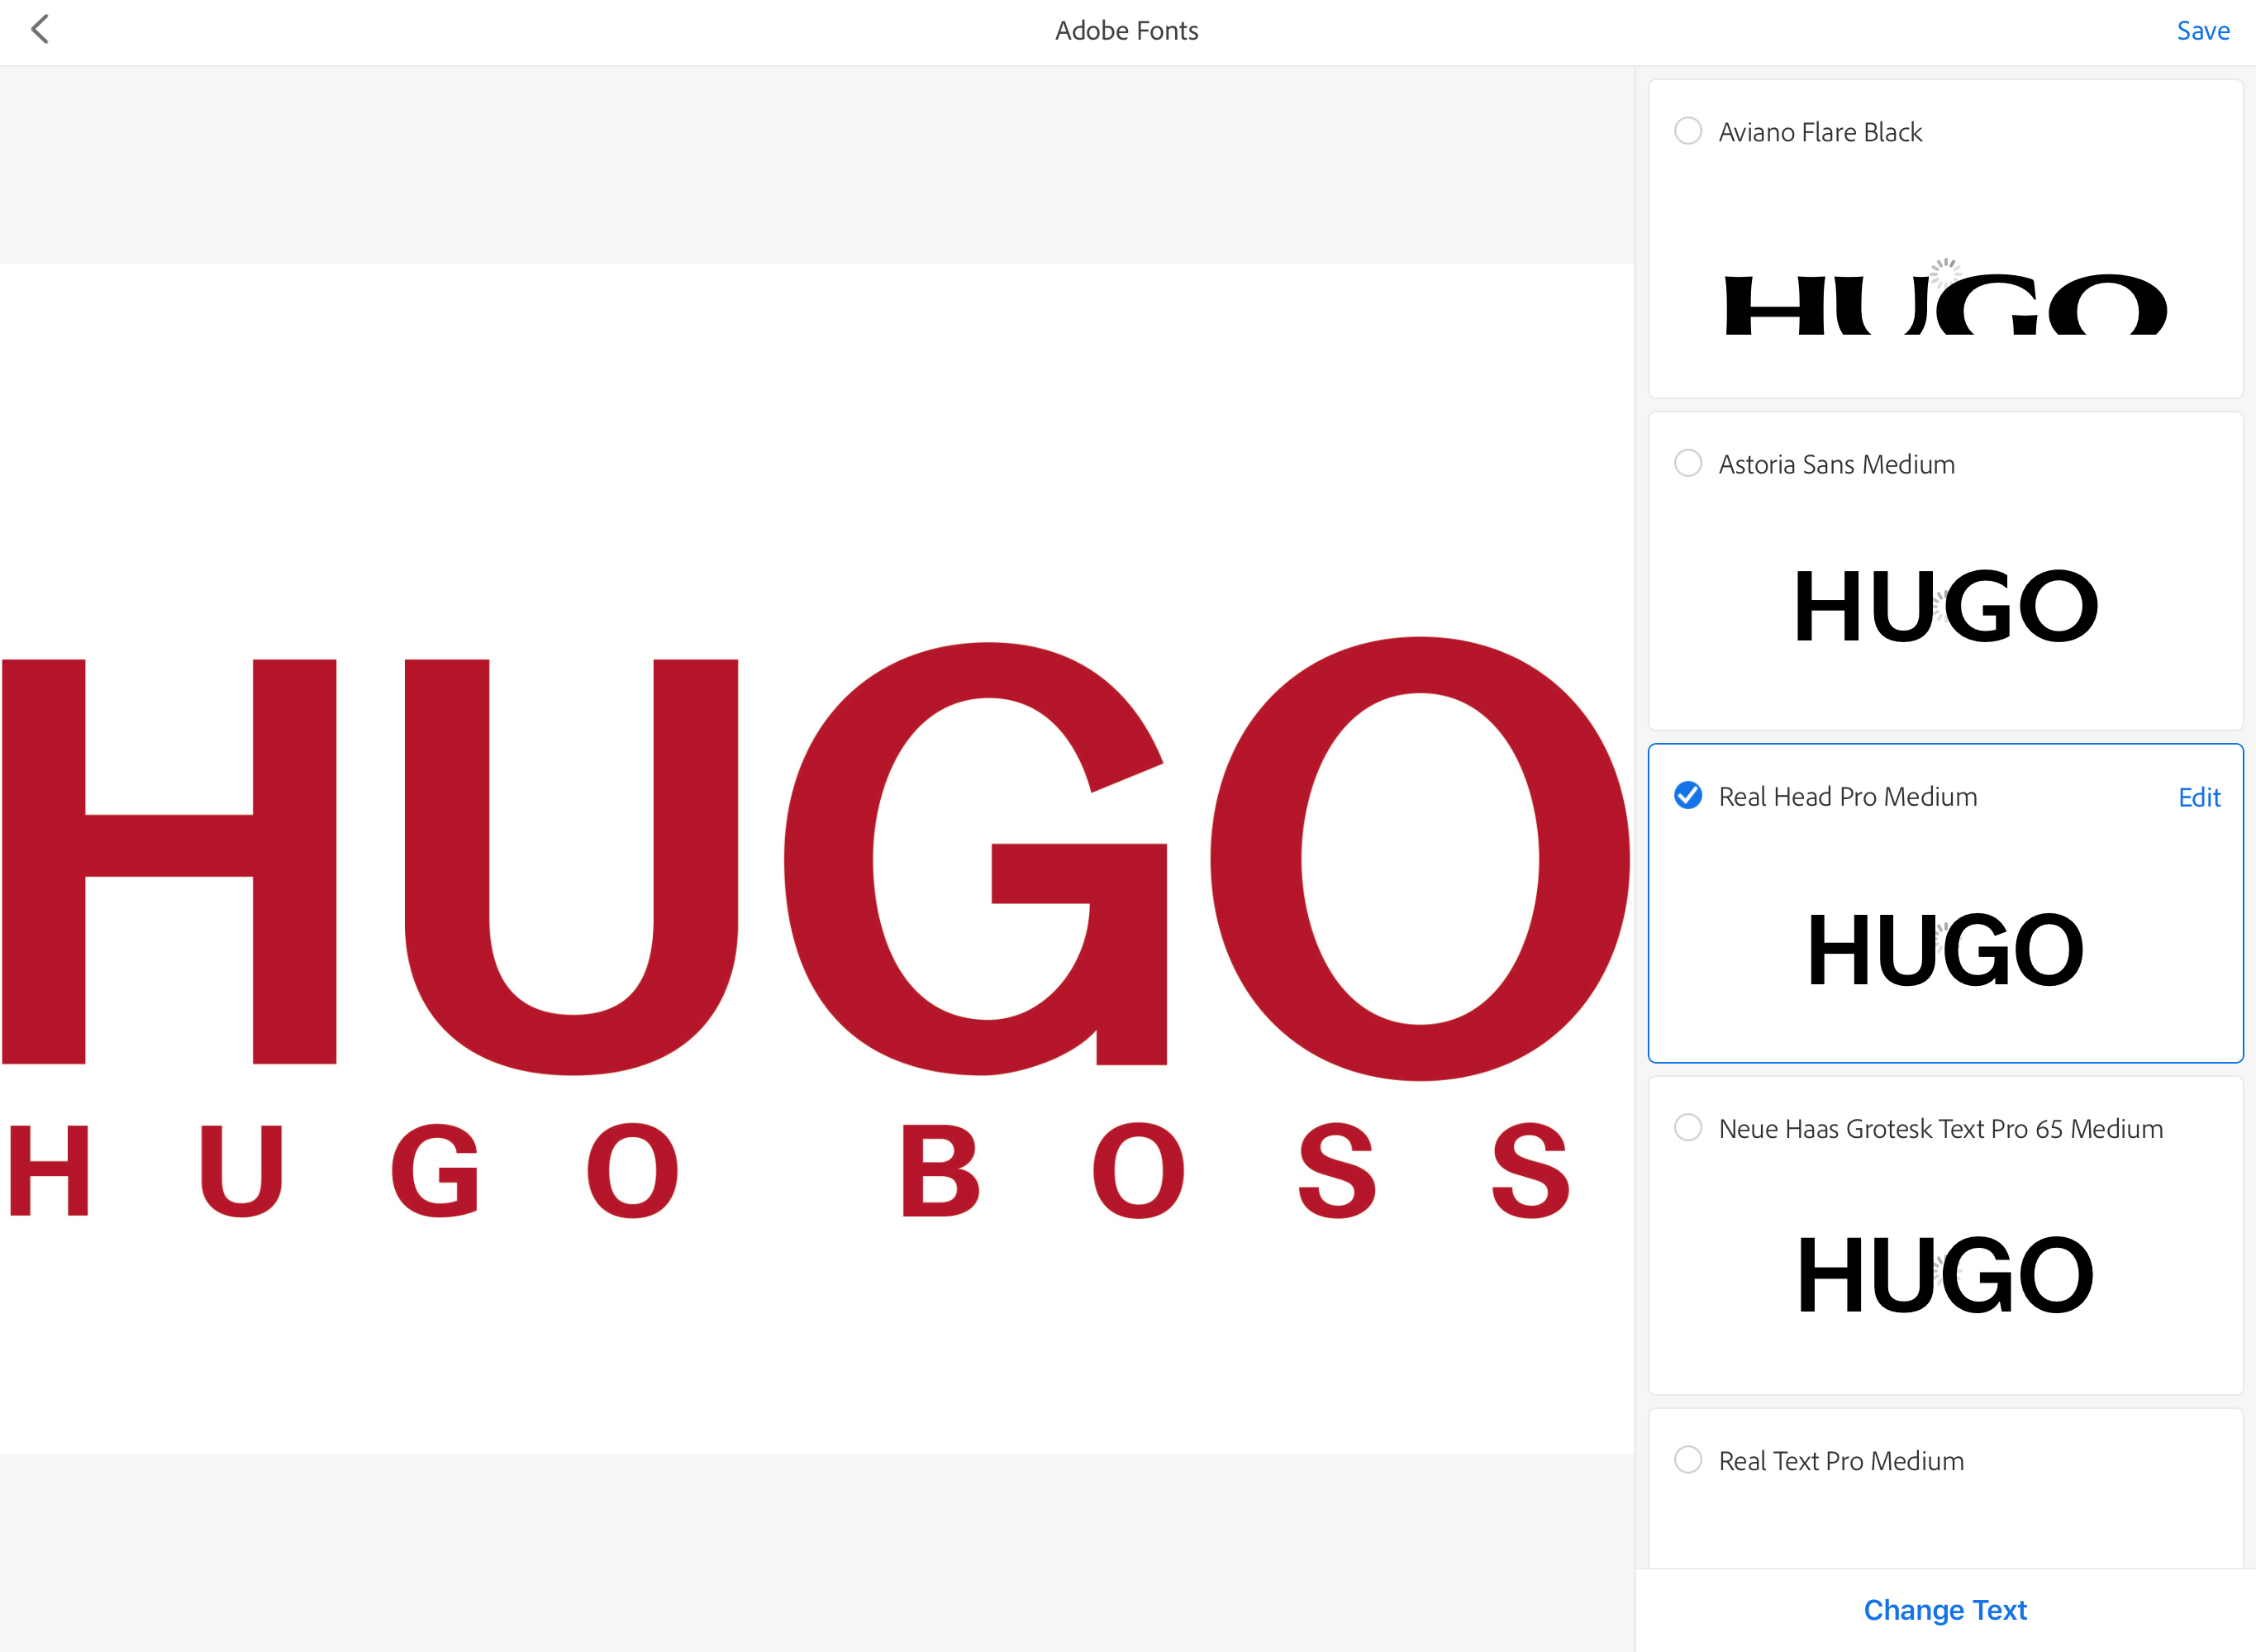 Hugo на русском. Hugo логотип. Логотип Hugo красный. Хьюго босс эмблема. Босс бренд.